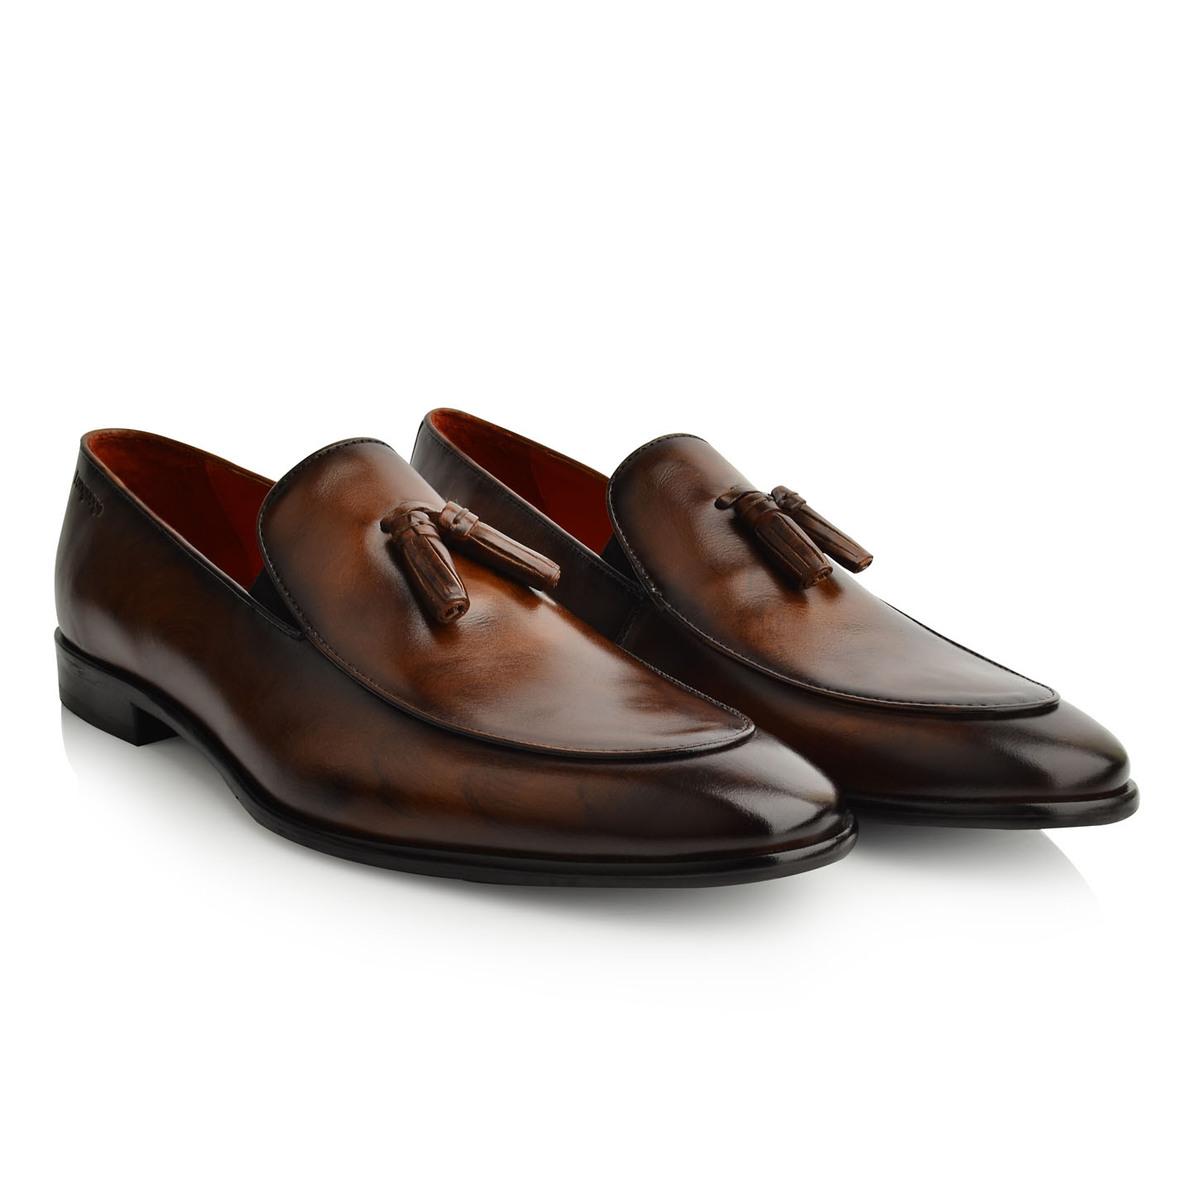 Buy Men Brown Party Moccasin Online | SKU: 194-940-12-41-Metro Shoes